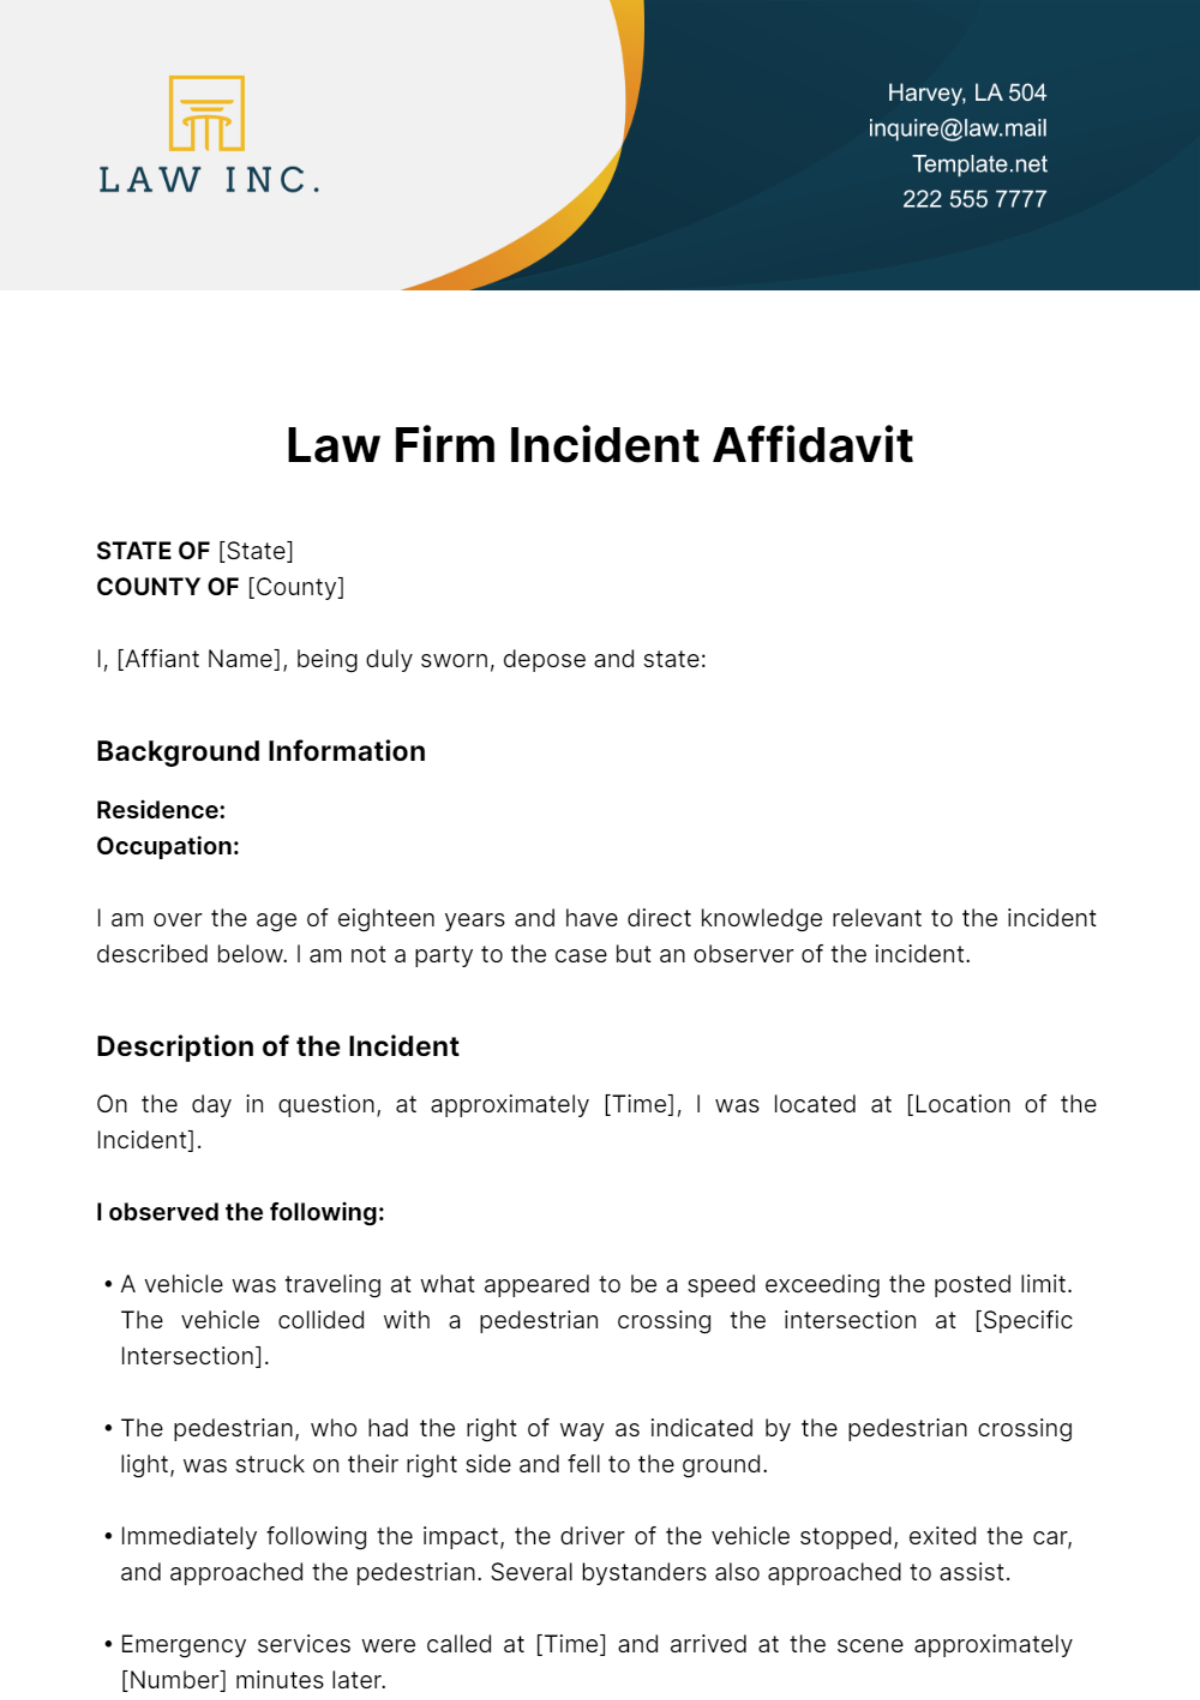 Law Firm Incident Affidavit Template